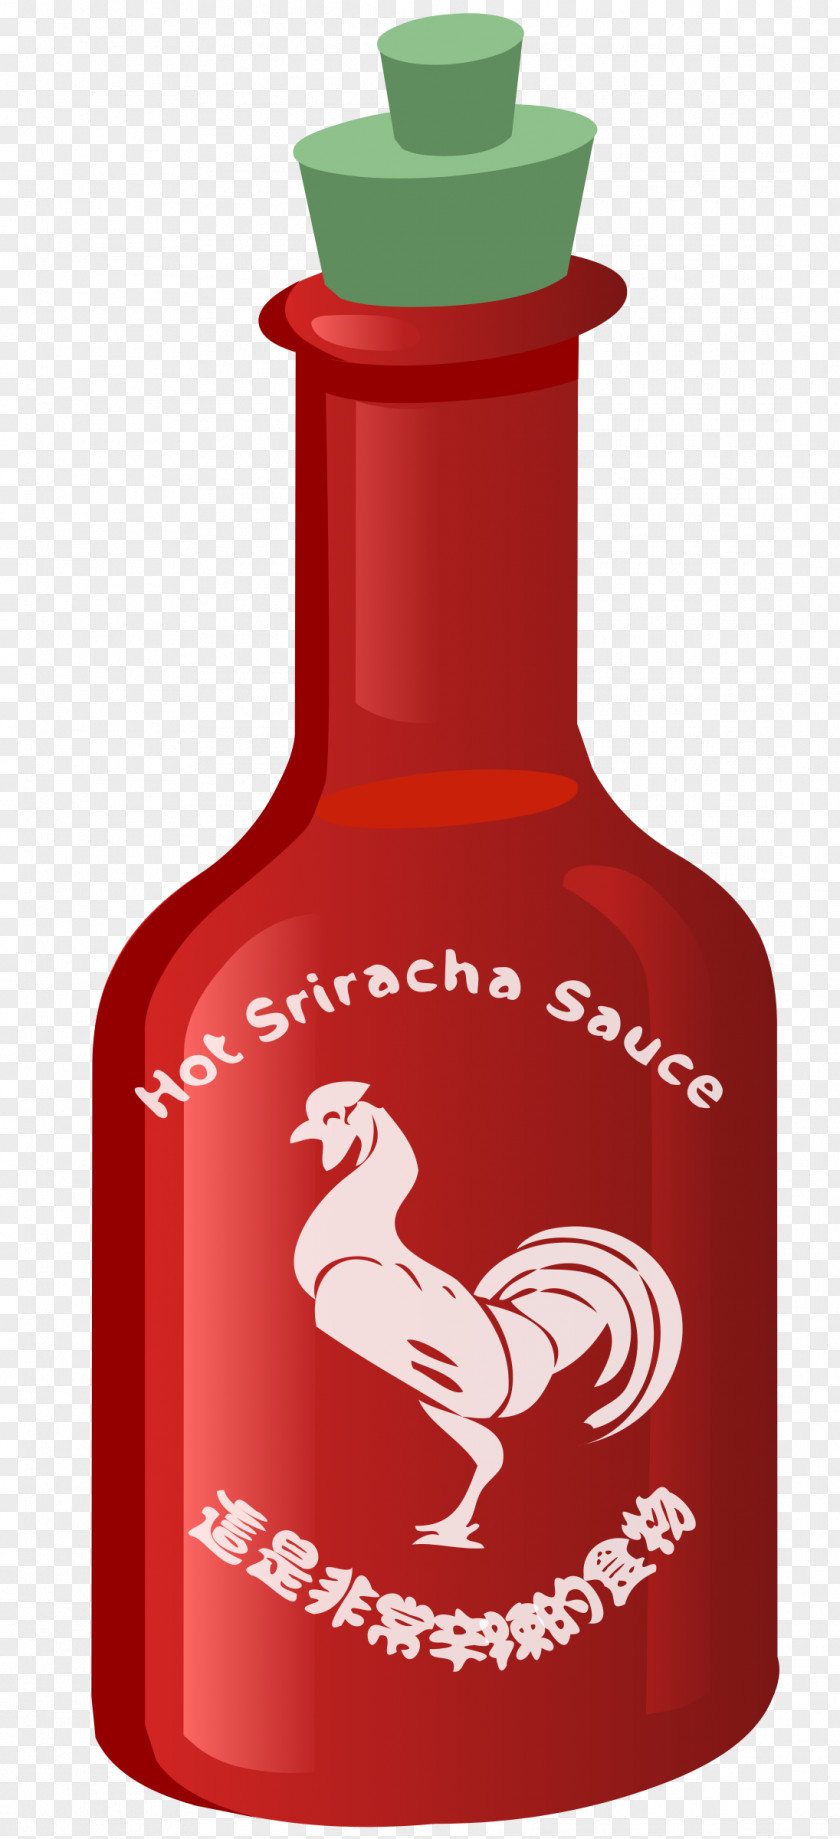 Hot Dog Thai Cuisine Sriracha Sauce Chili Pepper PNG